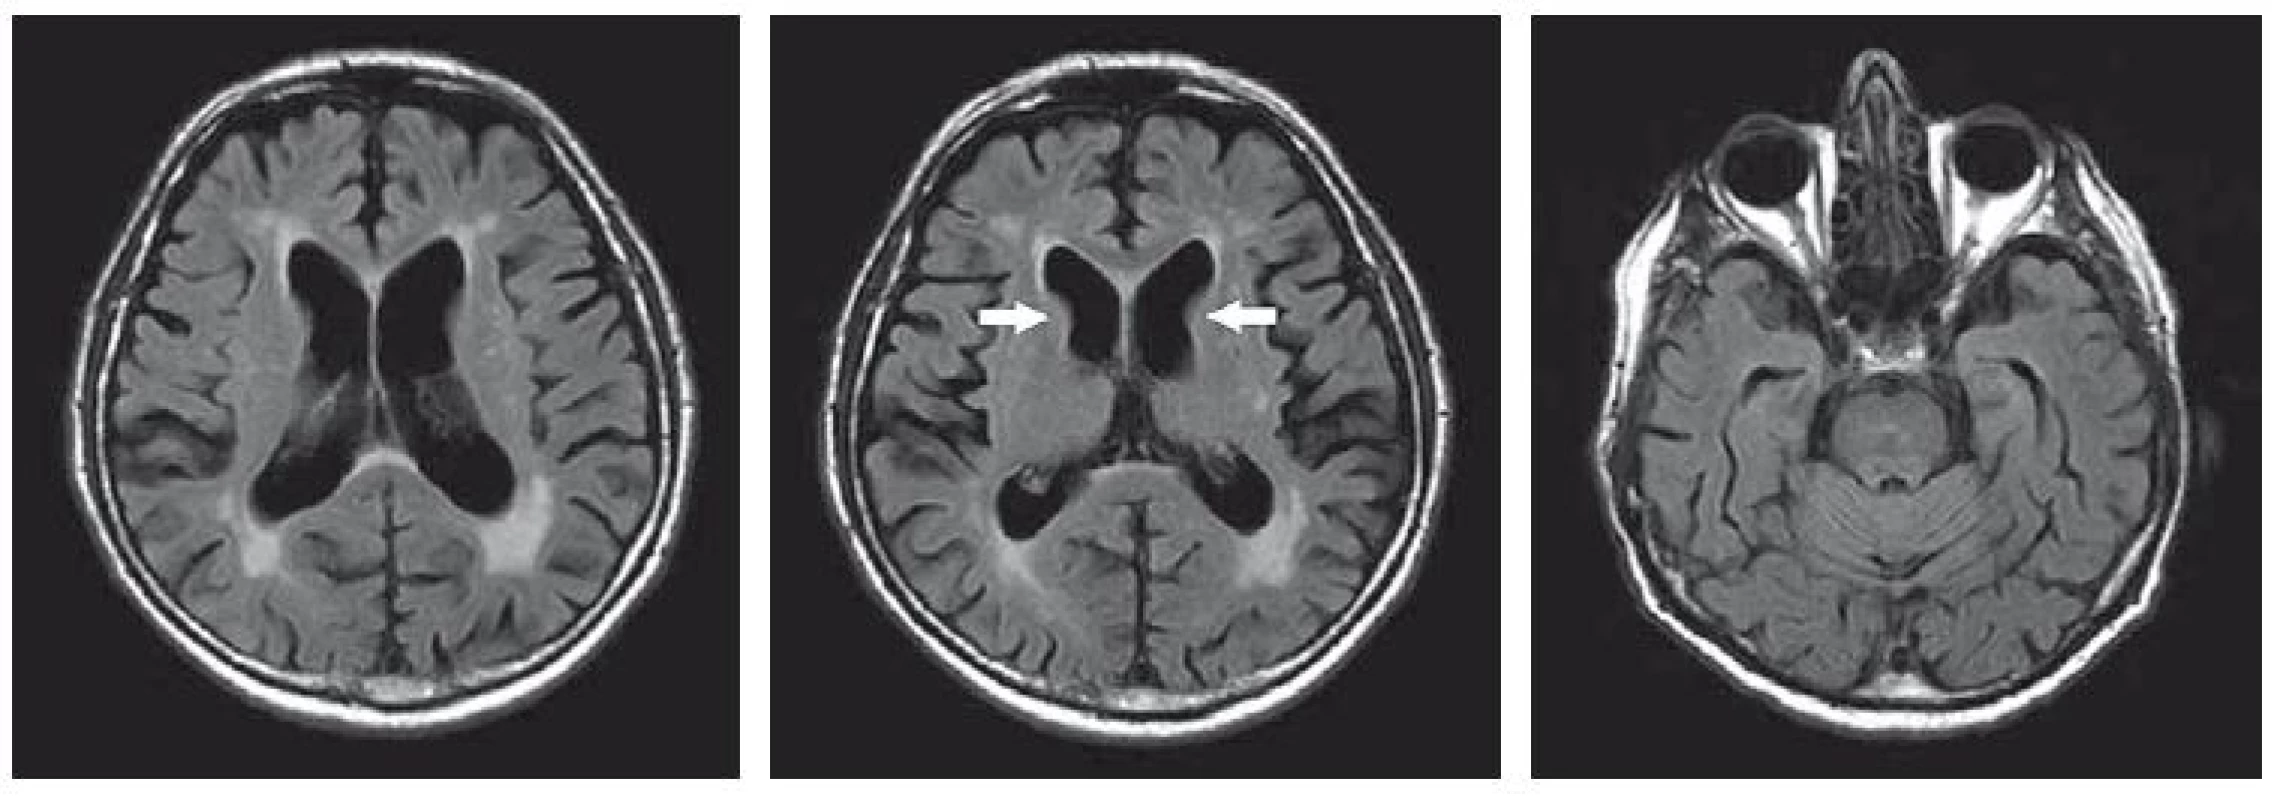 MR mozku z roku 2016, FLAIR. Leukoaraióza a drobné ischemické lakuny v bazálních gangliích oboustranně, atrofie mozku kortikosubkortikální, atrofie caput nuclei caudati oboustranně (označeno šipkami). <br>Fig. 2. MRI brain scan from 2016, FLAIR. Leucoaraiosis and small post-ischemic lacunes in bilateral basal ganglia, corticosubcortical brain atrophy, bilateral atrophy of the caudate nucleus (arrows).